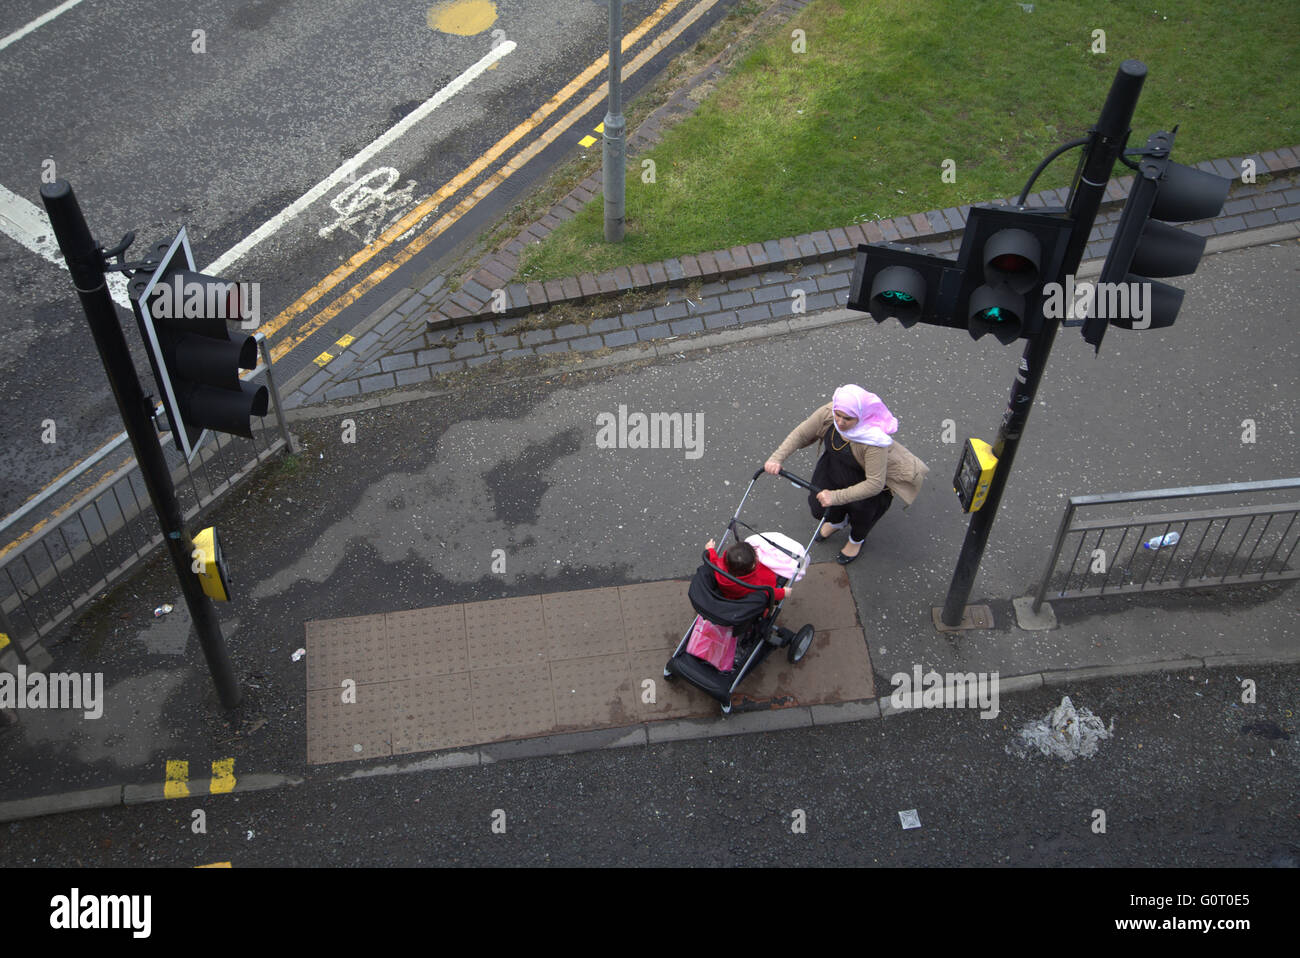 immigrant family on pavement near traffic lights, Glasgow, Scotland Stock Photo